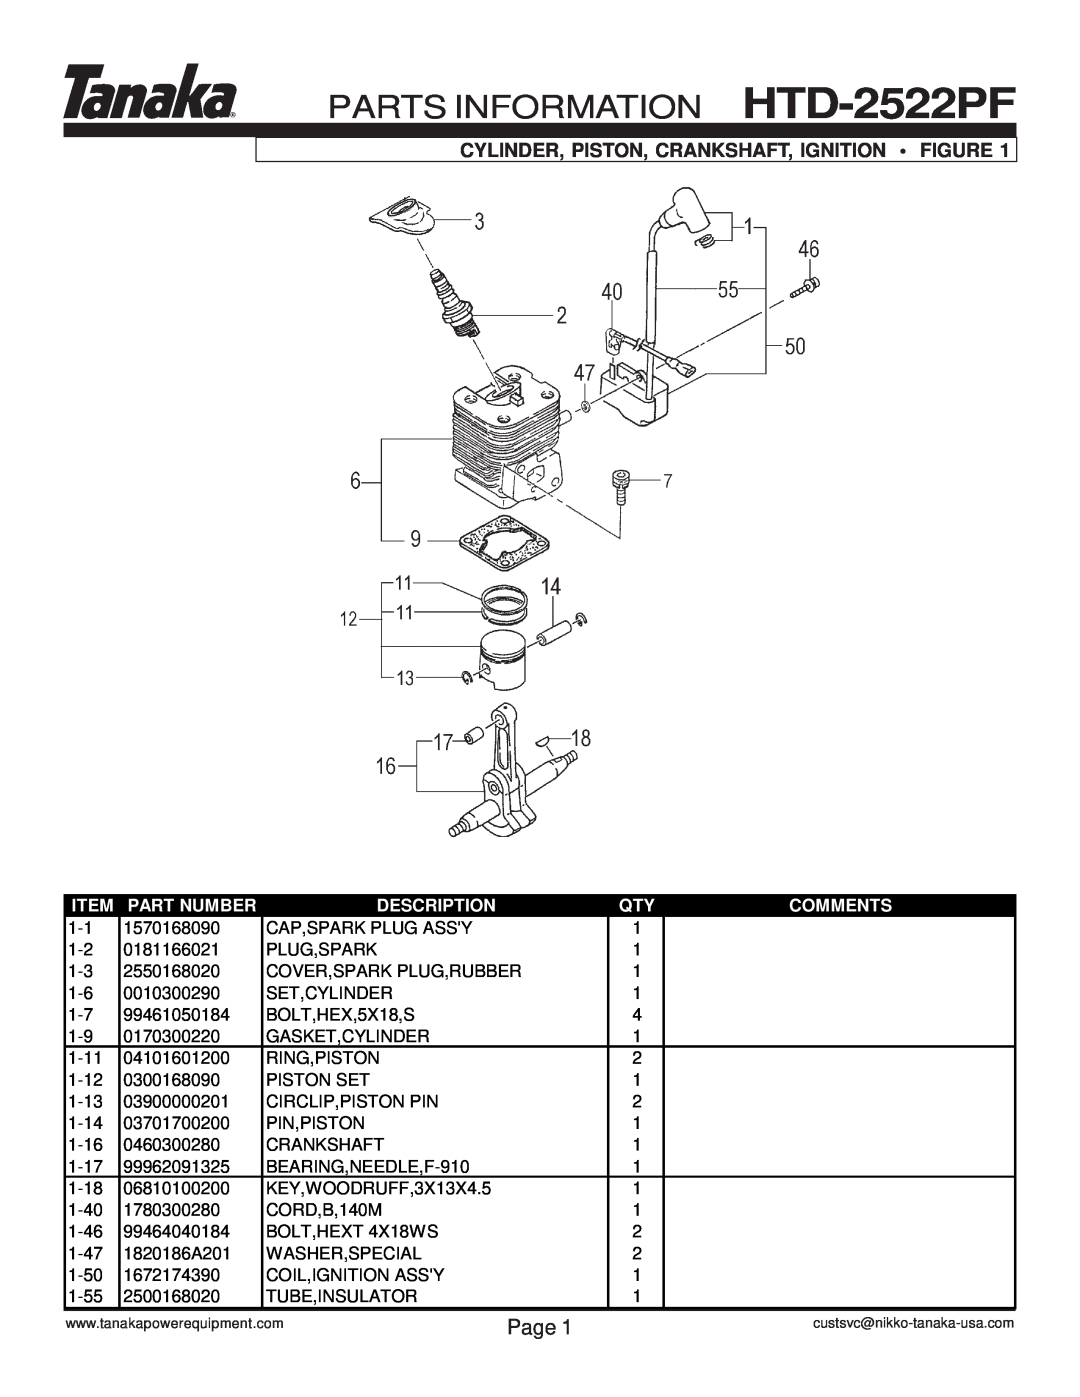 Tanaka PARTS INFORMATION HTD-2522PF, Cylinder, Piston, Crankshaft, Ignition Figure, Page, Part Number, Description 